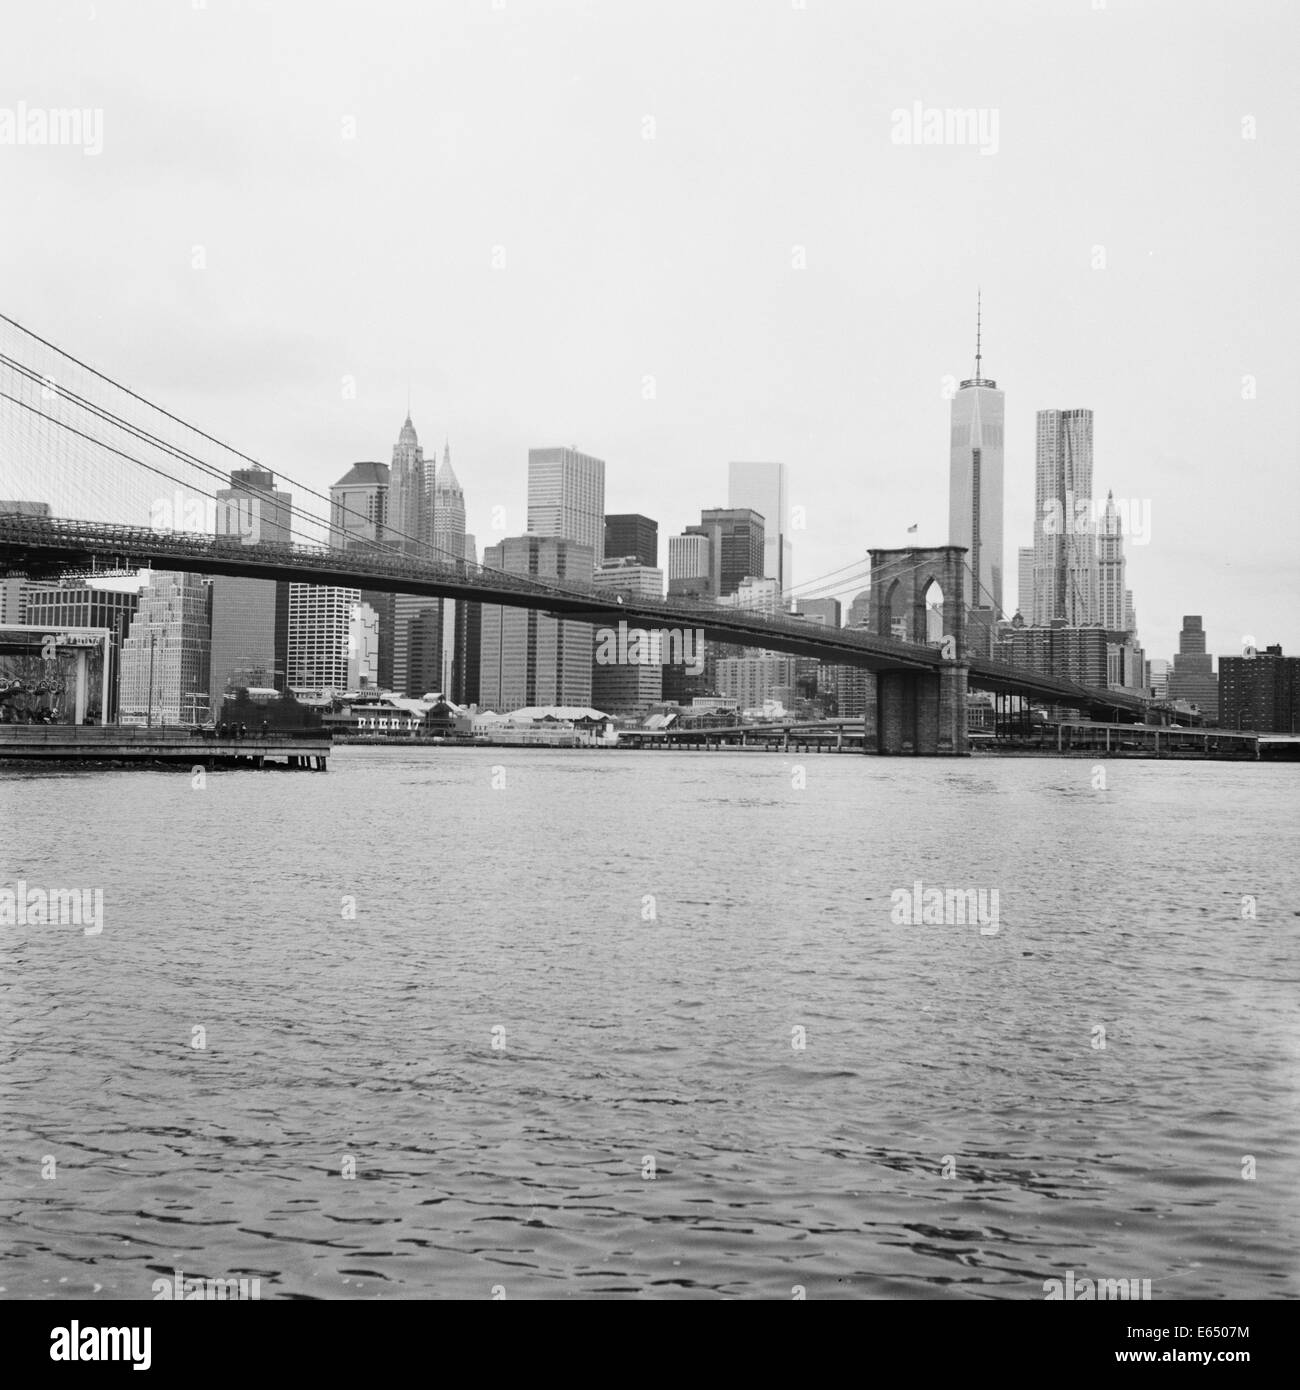 Brooklyn bridge and Lower Manhattan taken on medium format film Stock Photo